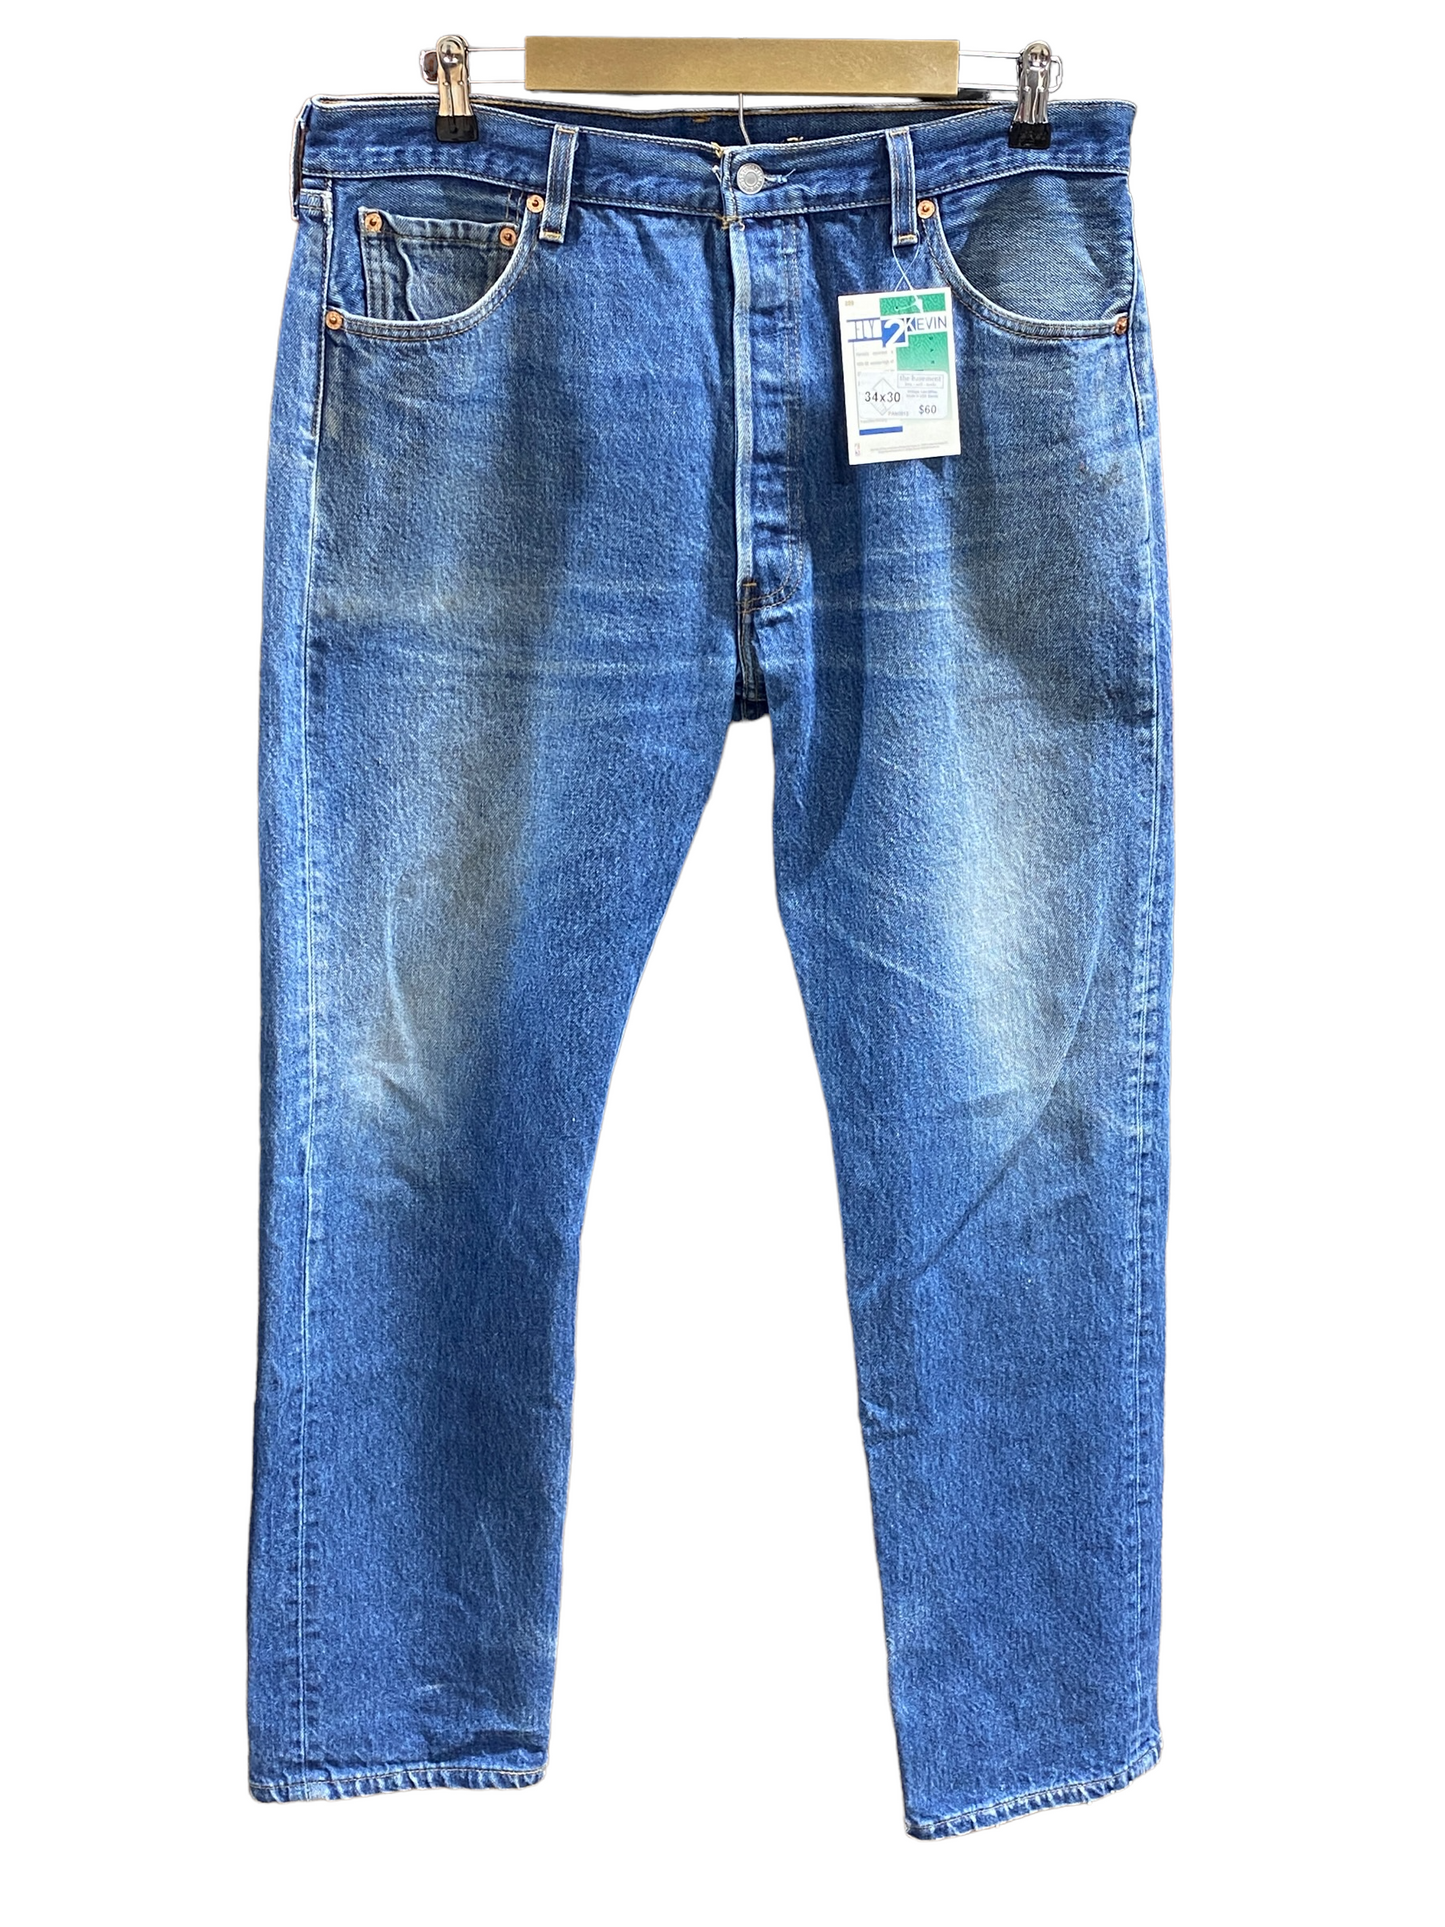 Vintage Levi 501XX Made in USA Medium Wash Denim Jeans Size 34x30